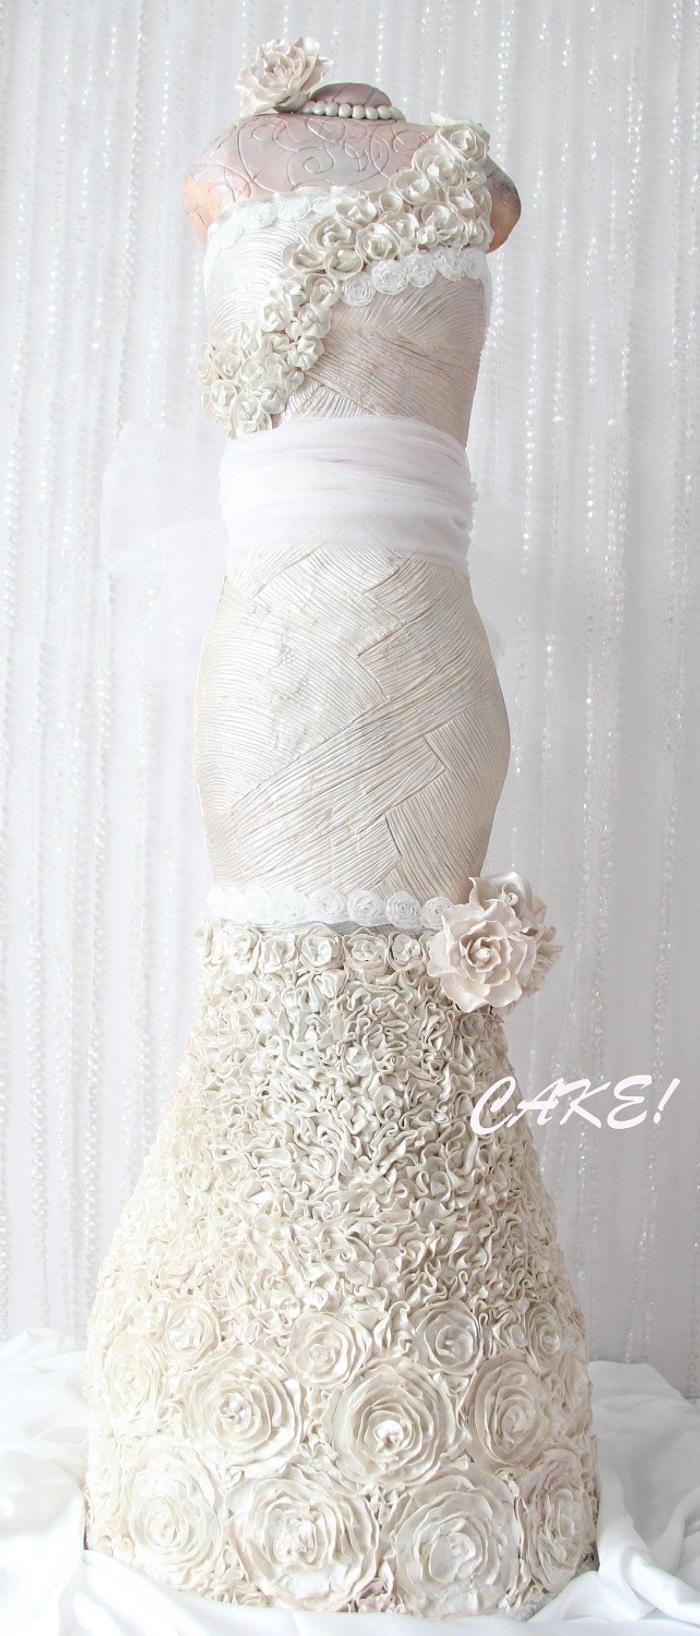 4 Foot Tall Wedding Dress Cake 